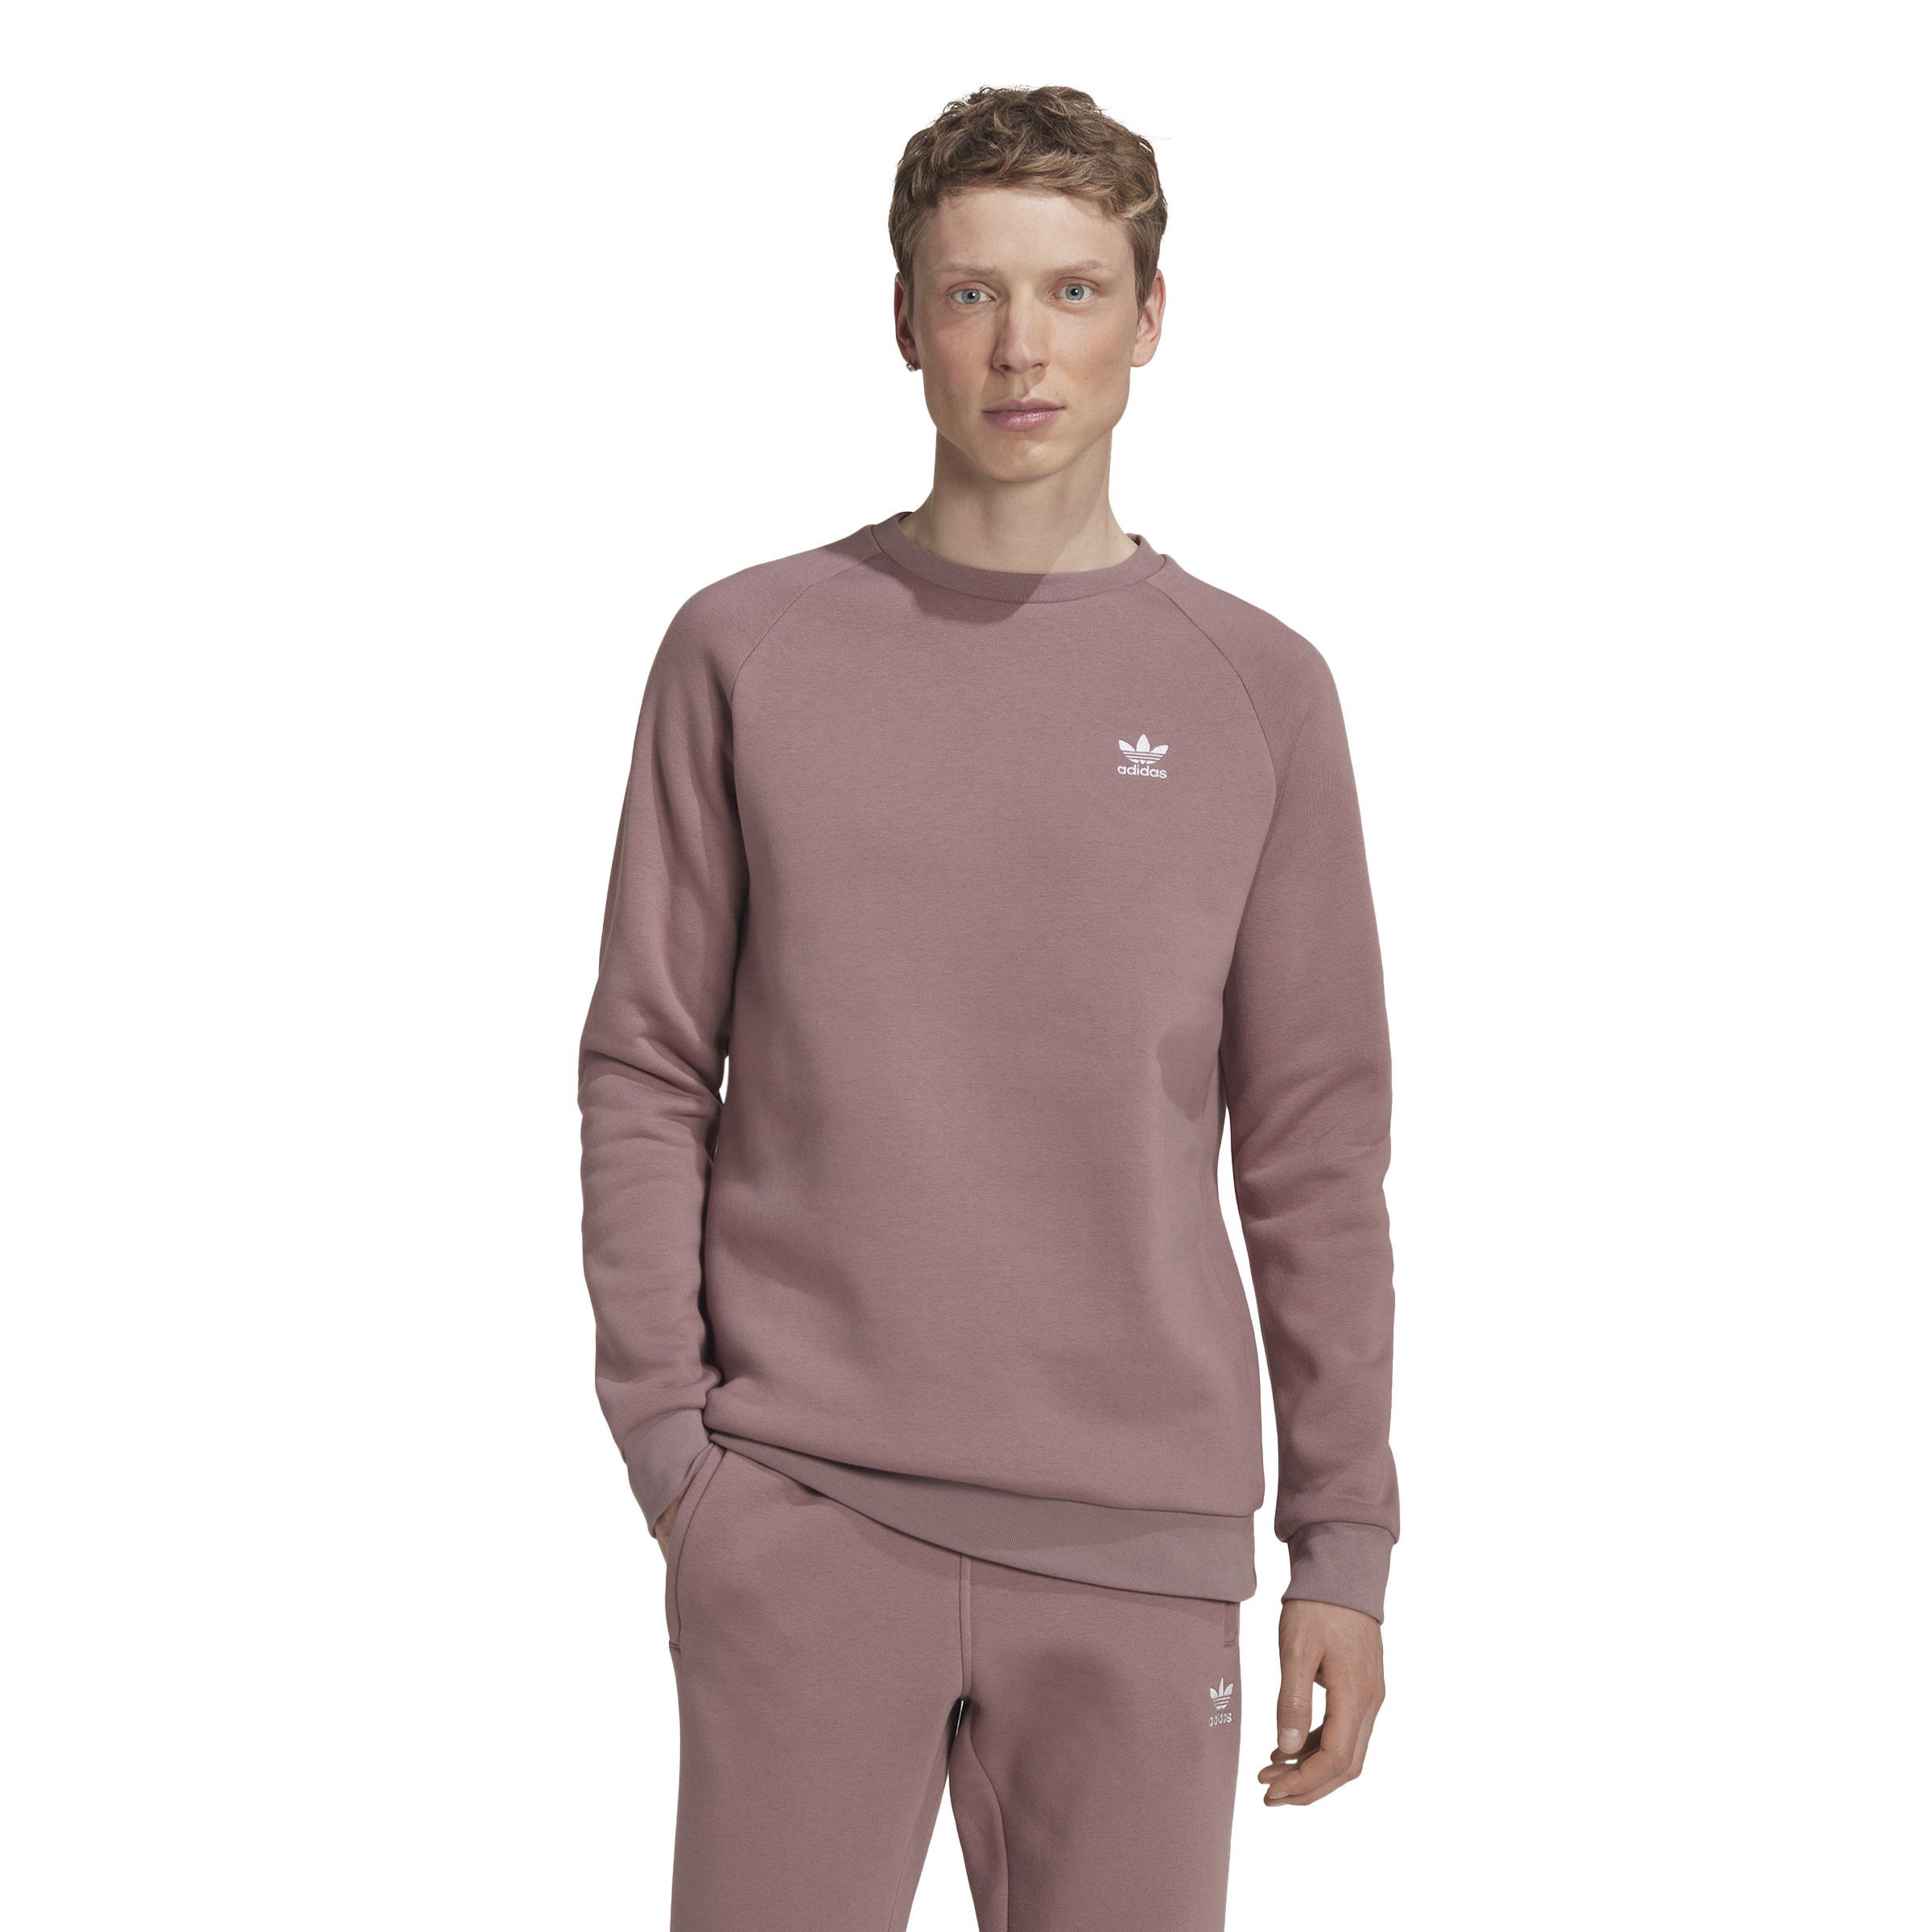 Adidas - Adicolor essentials trefoil crewneck sweatshirt, Antique Pink, large image number 1